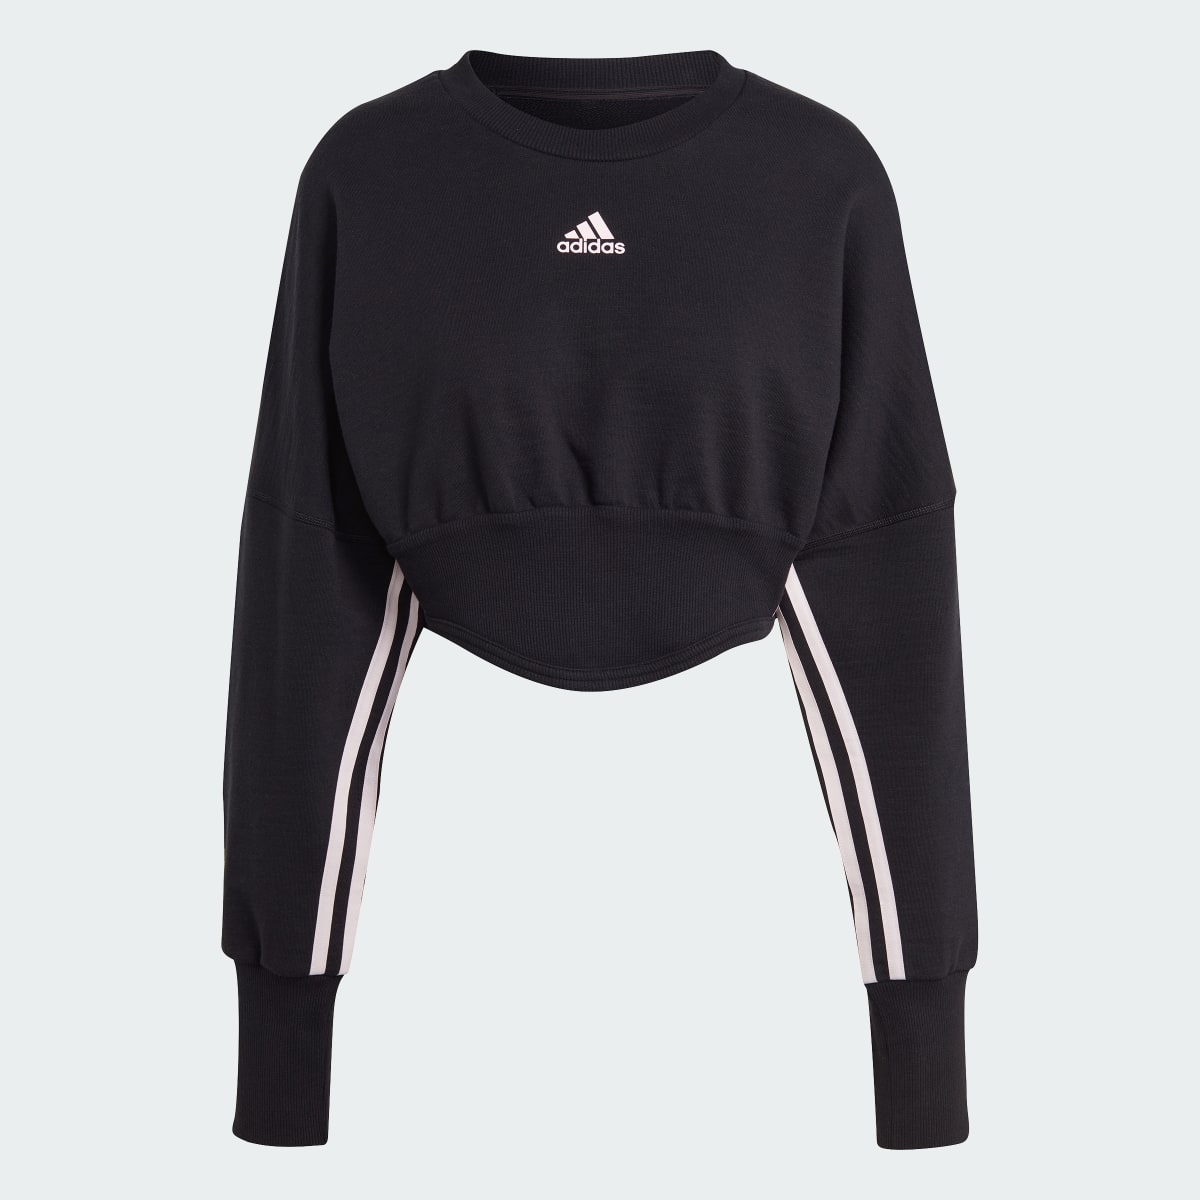 Adidas Dance 3-Stripes Corset-Inspired Sweatshirt. 4